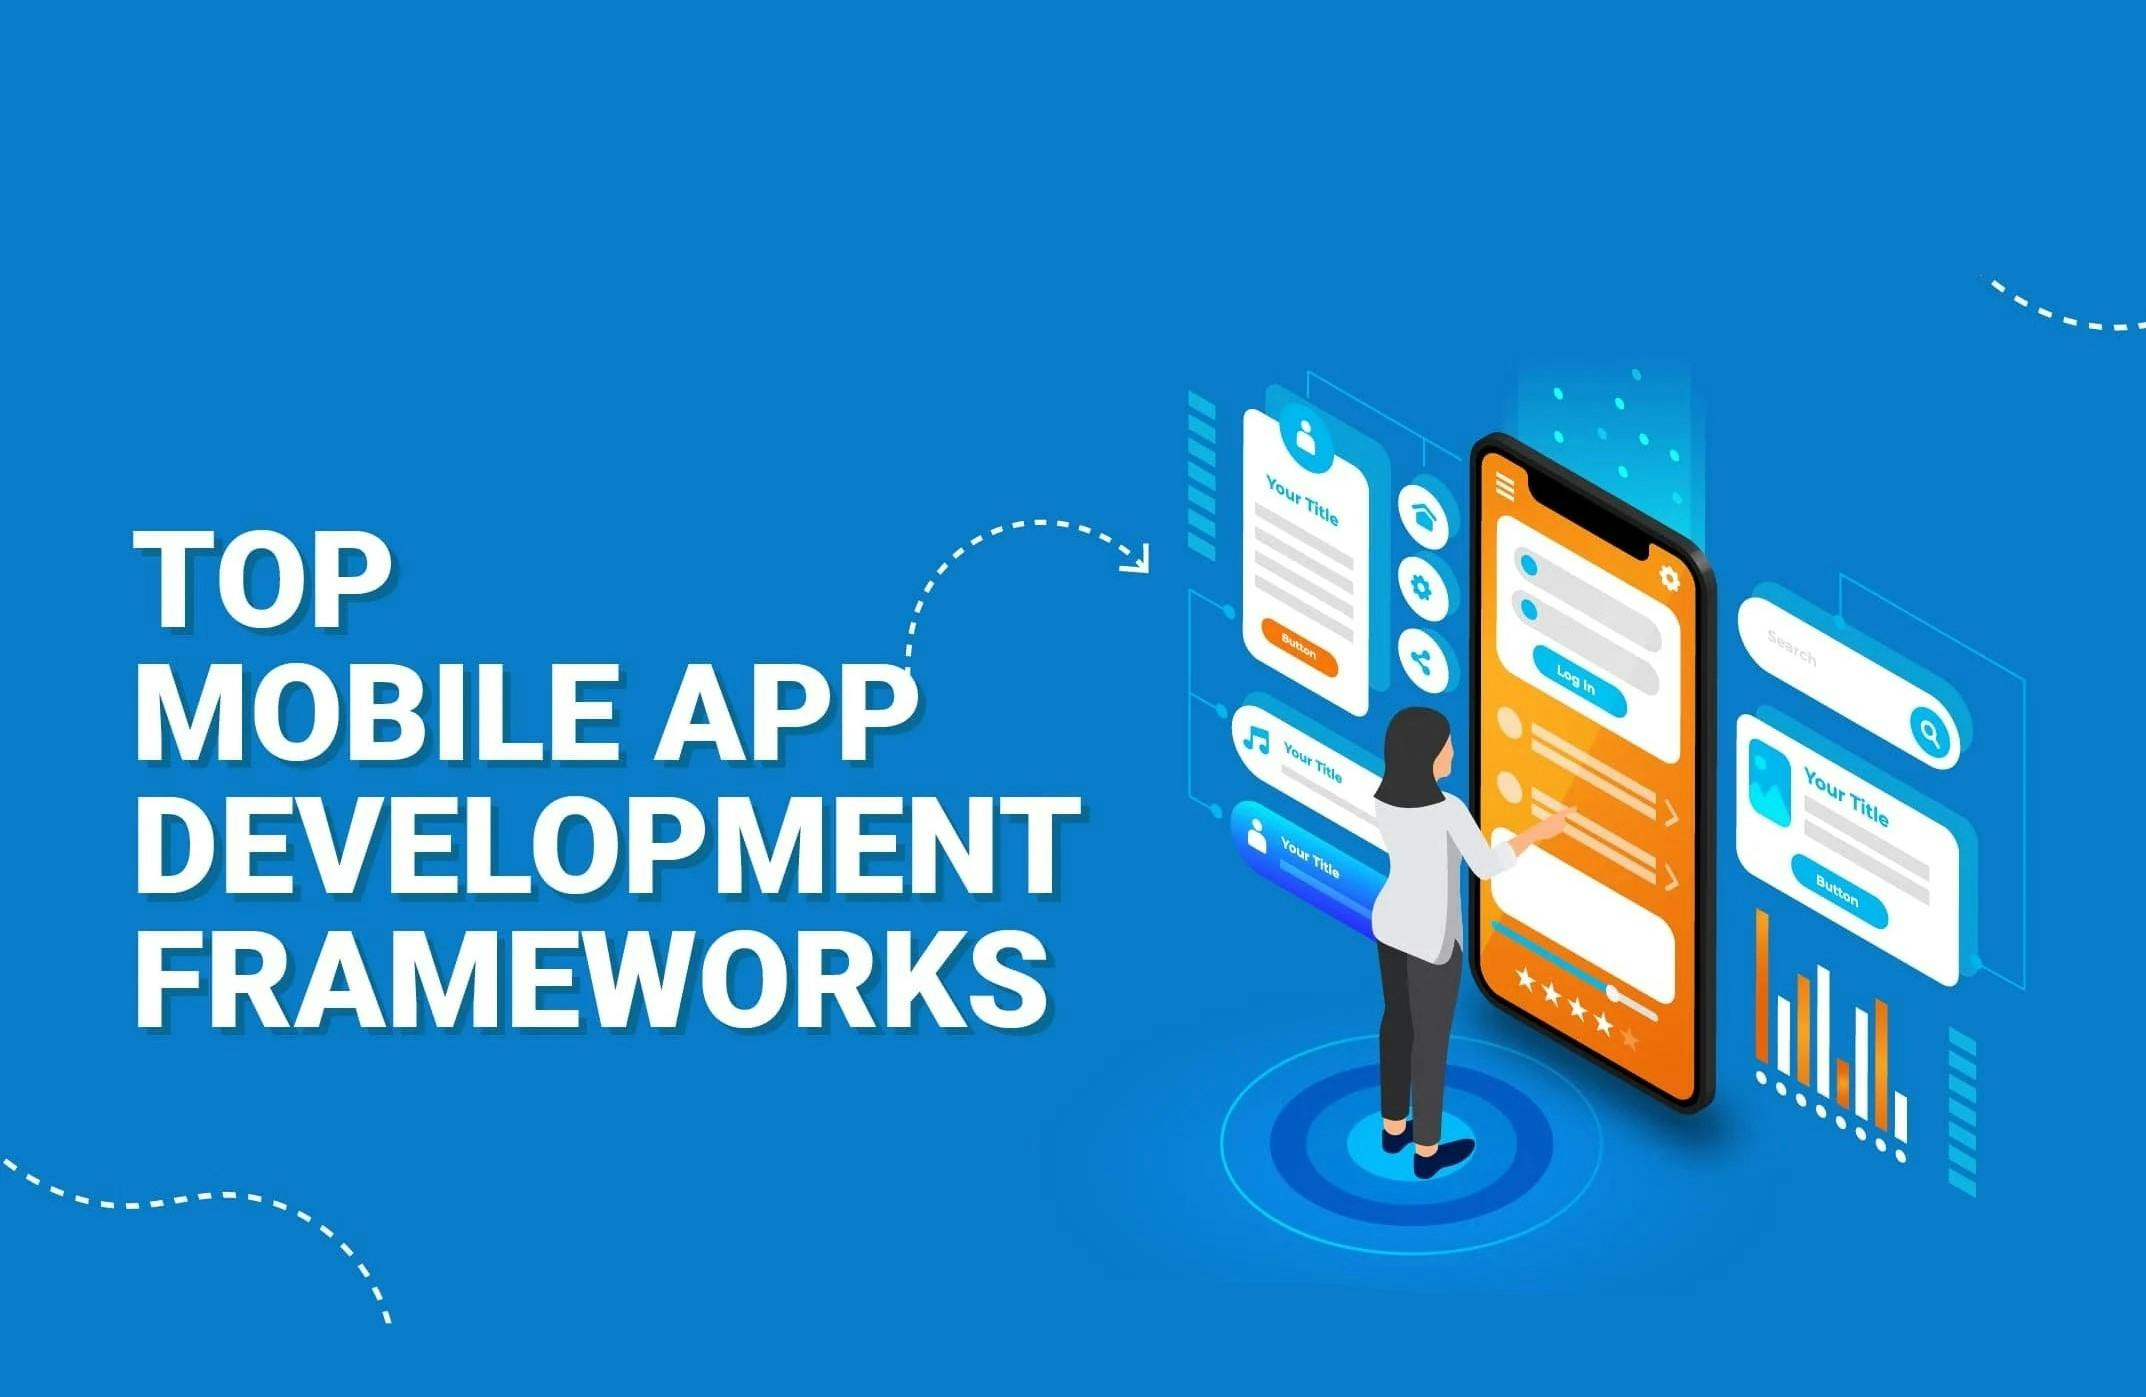 Which Framework is Best for Mobile App Development?